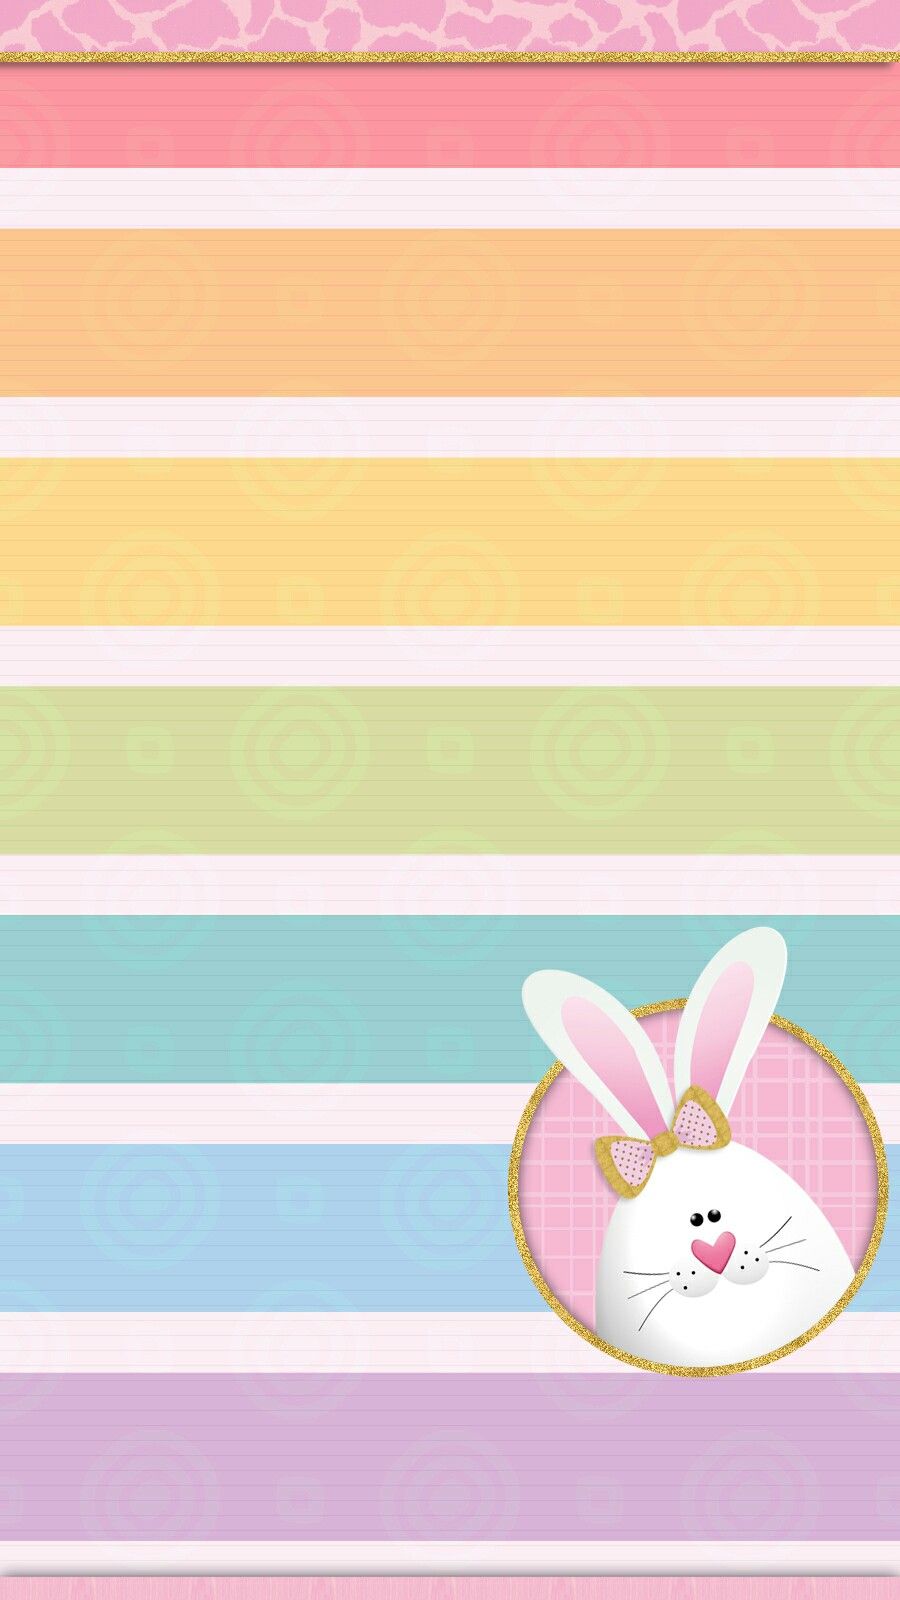 Easter bunny wallpaper iphone. Easter wallpaper, Bunny wallpaper, iPhone wallpaper easter